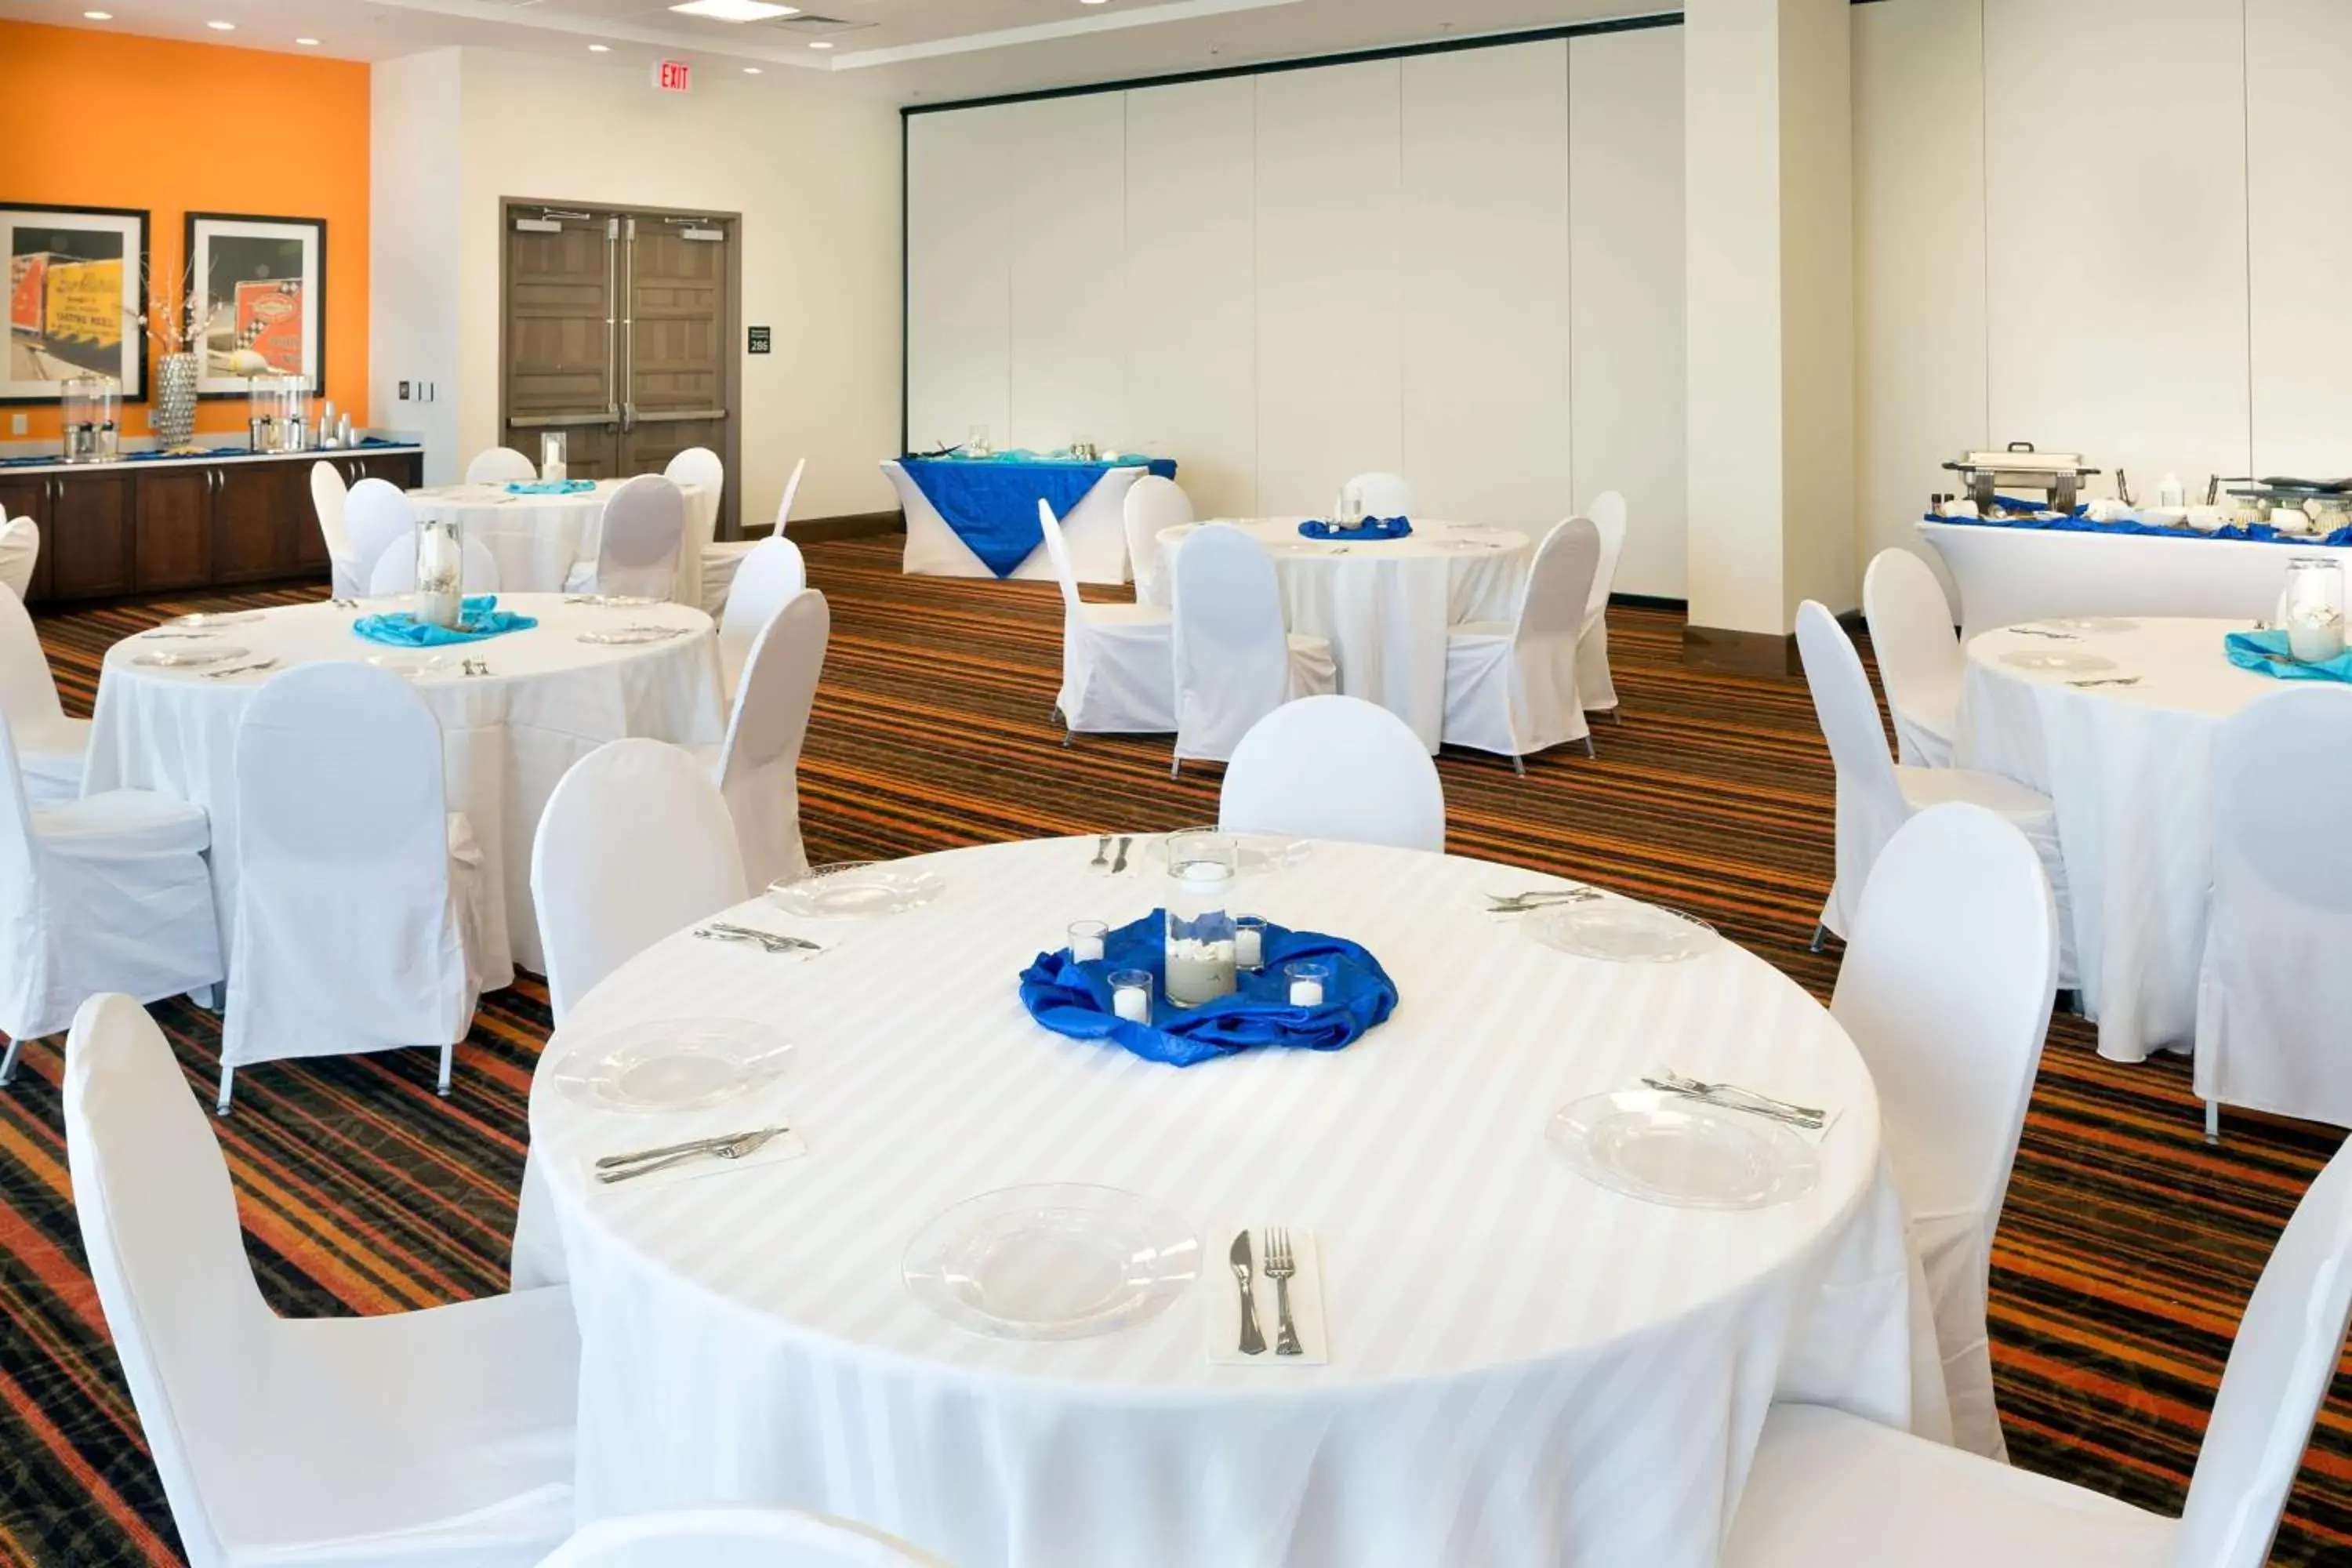 Meeting/conference room, Banquet Facilities in Hampton Inn & Suites - Orange Beach